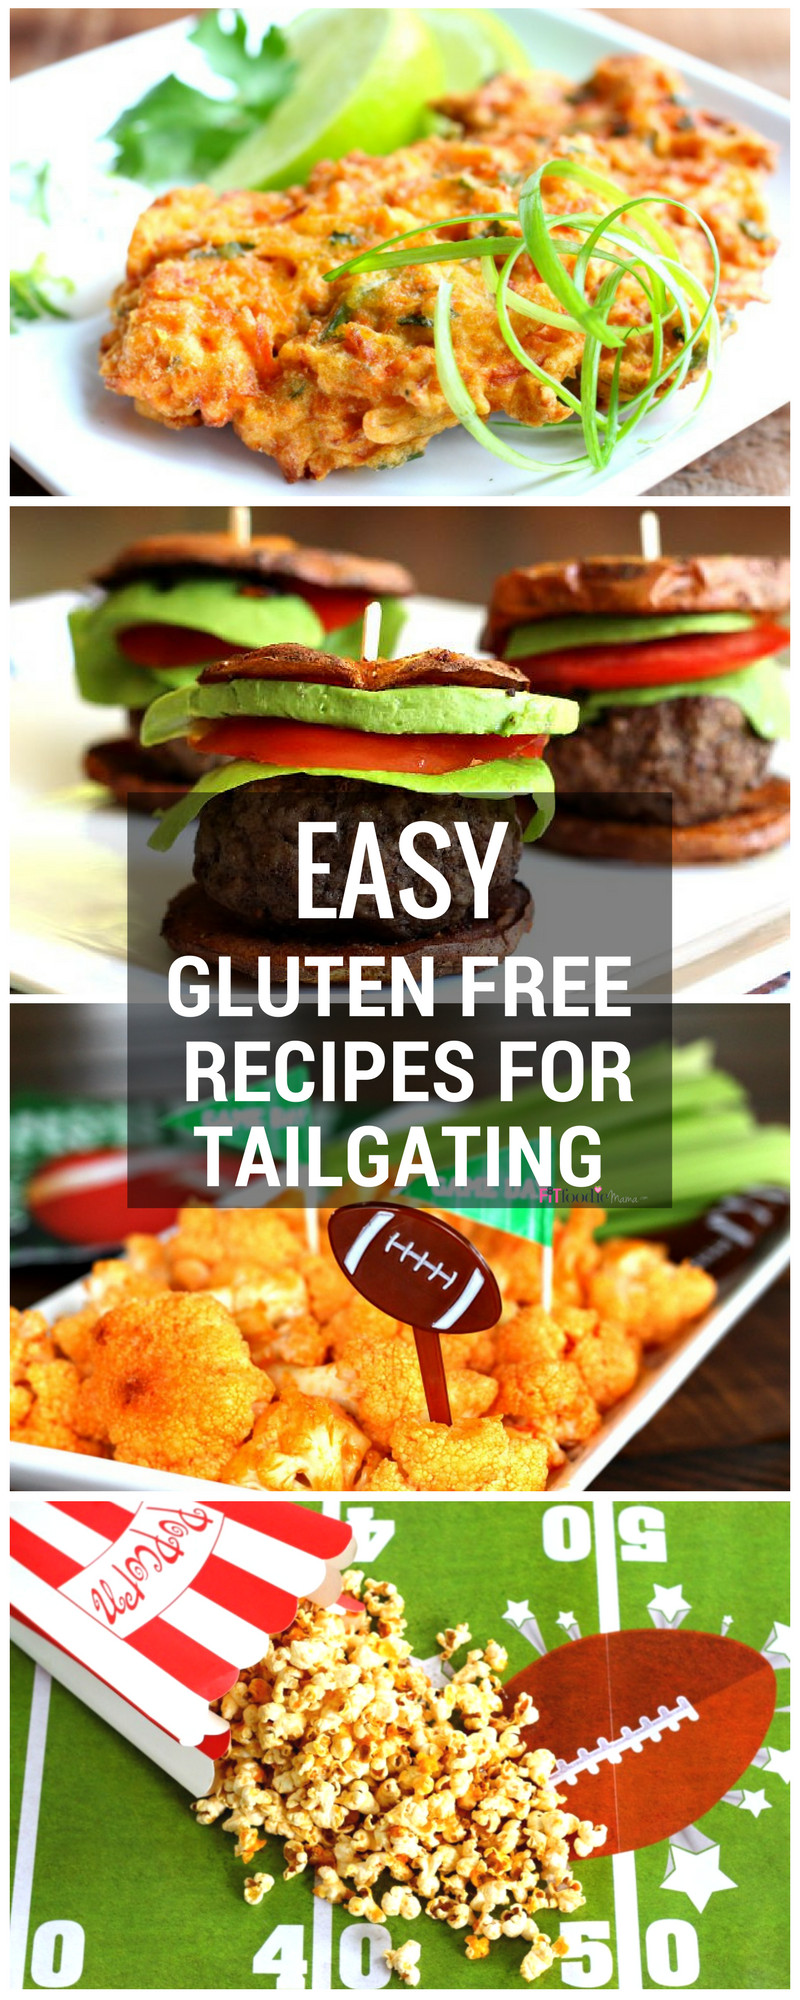 Easy Gluten Free Dairy Free Recipes
 Easy Gluten Free Tailgating Recipes for Football Season